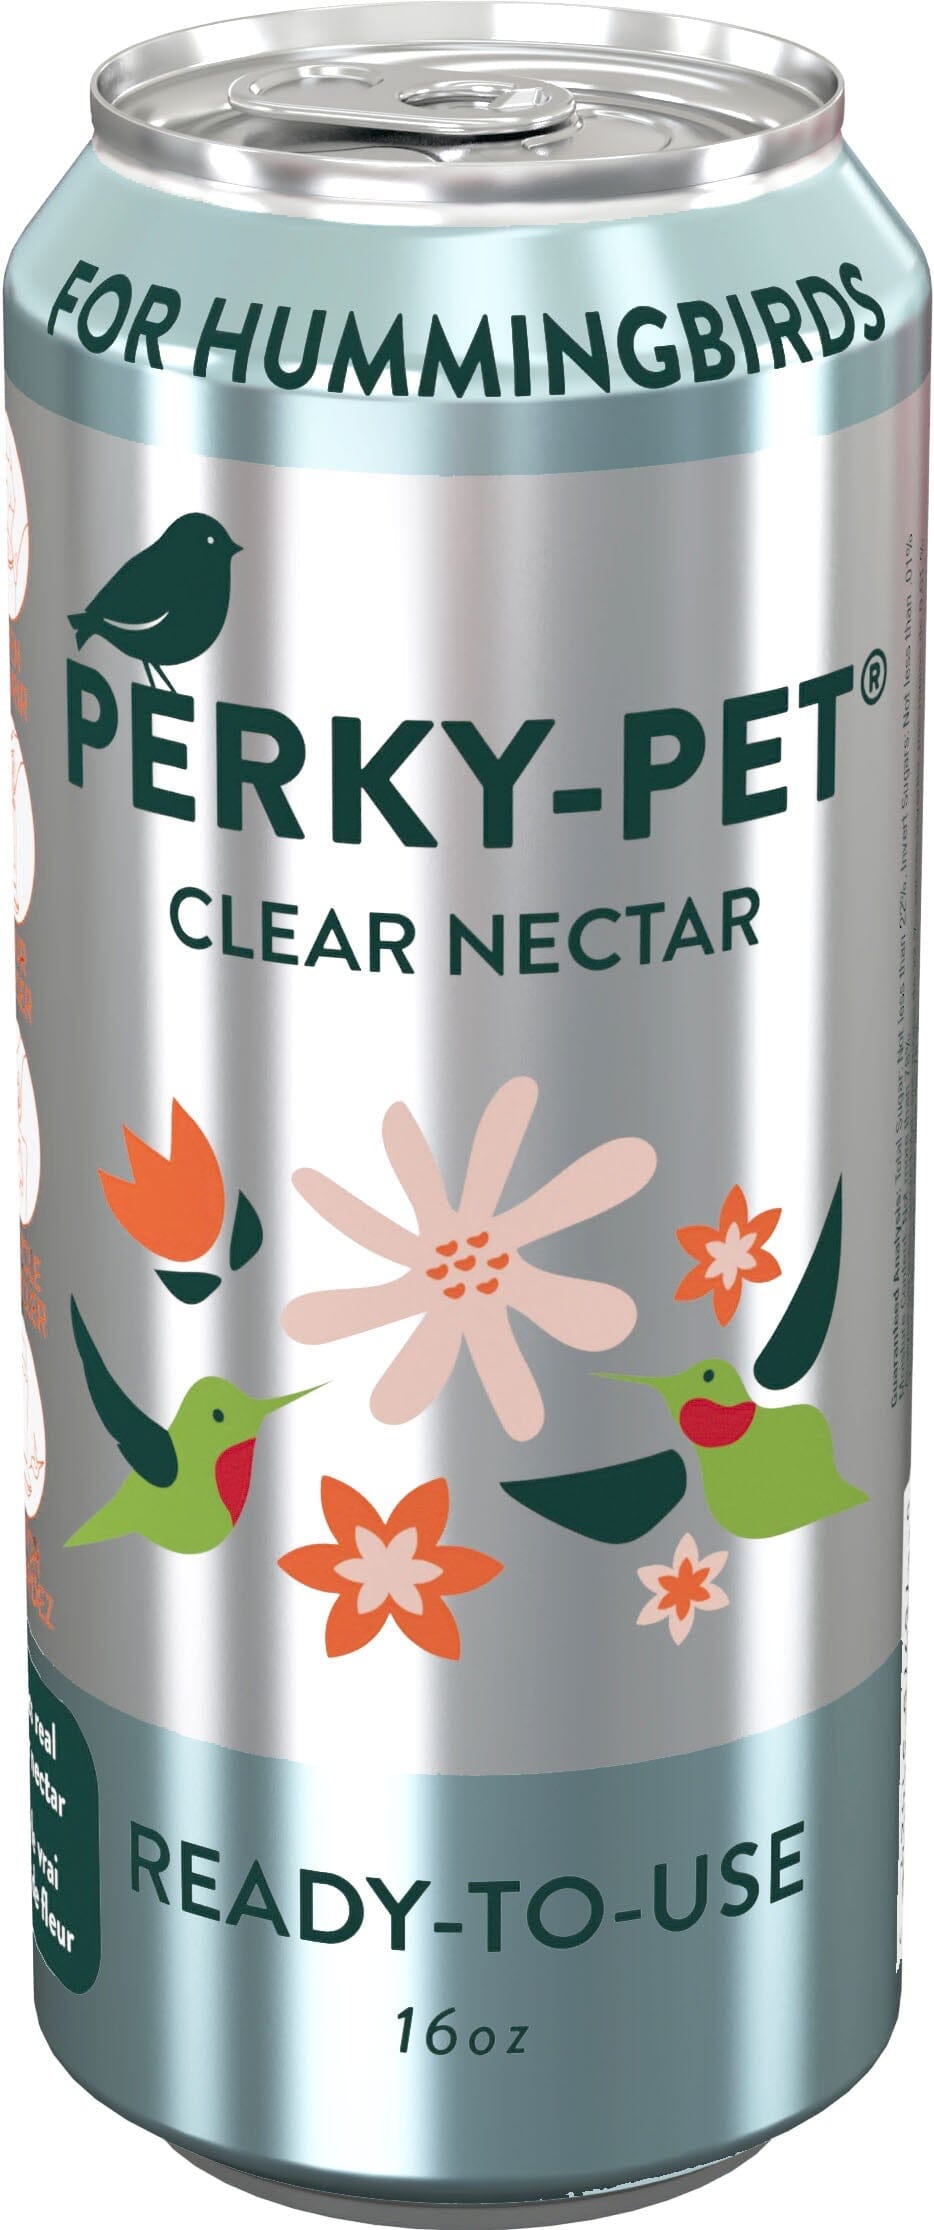 Perky-Pet Hummingbird Nectar Ready To Use Wild Bird Food - Clear - 16 Oz  